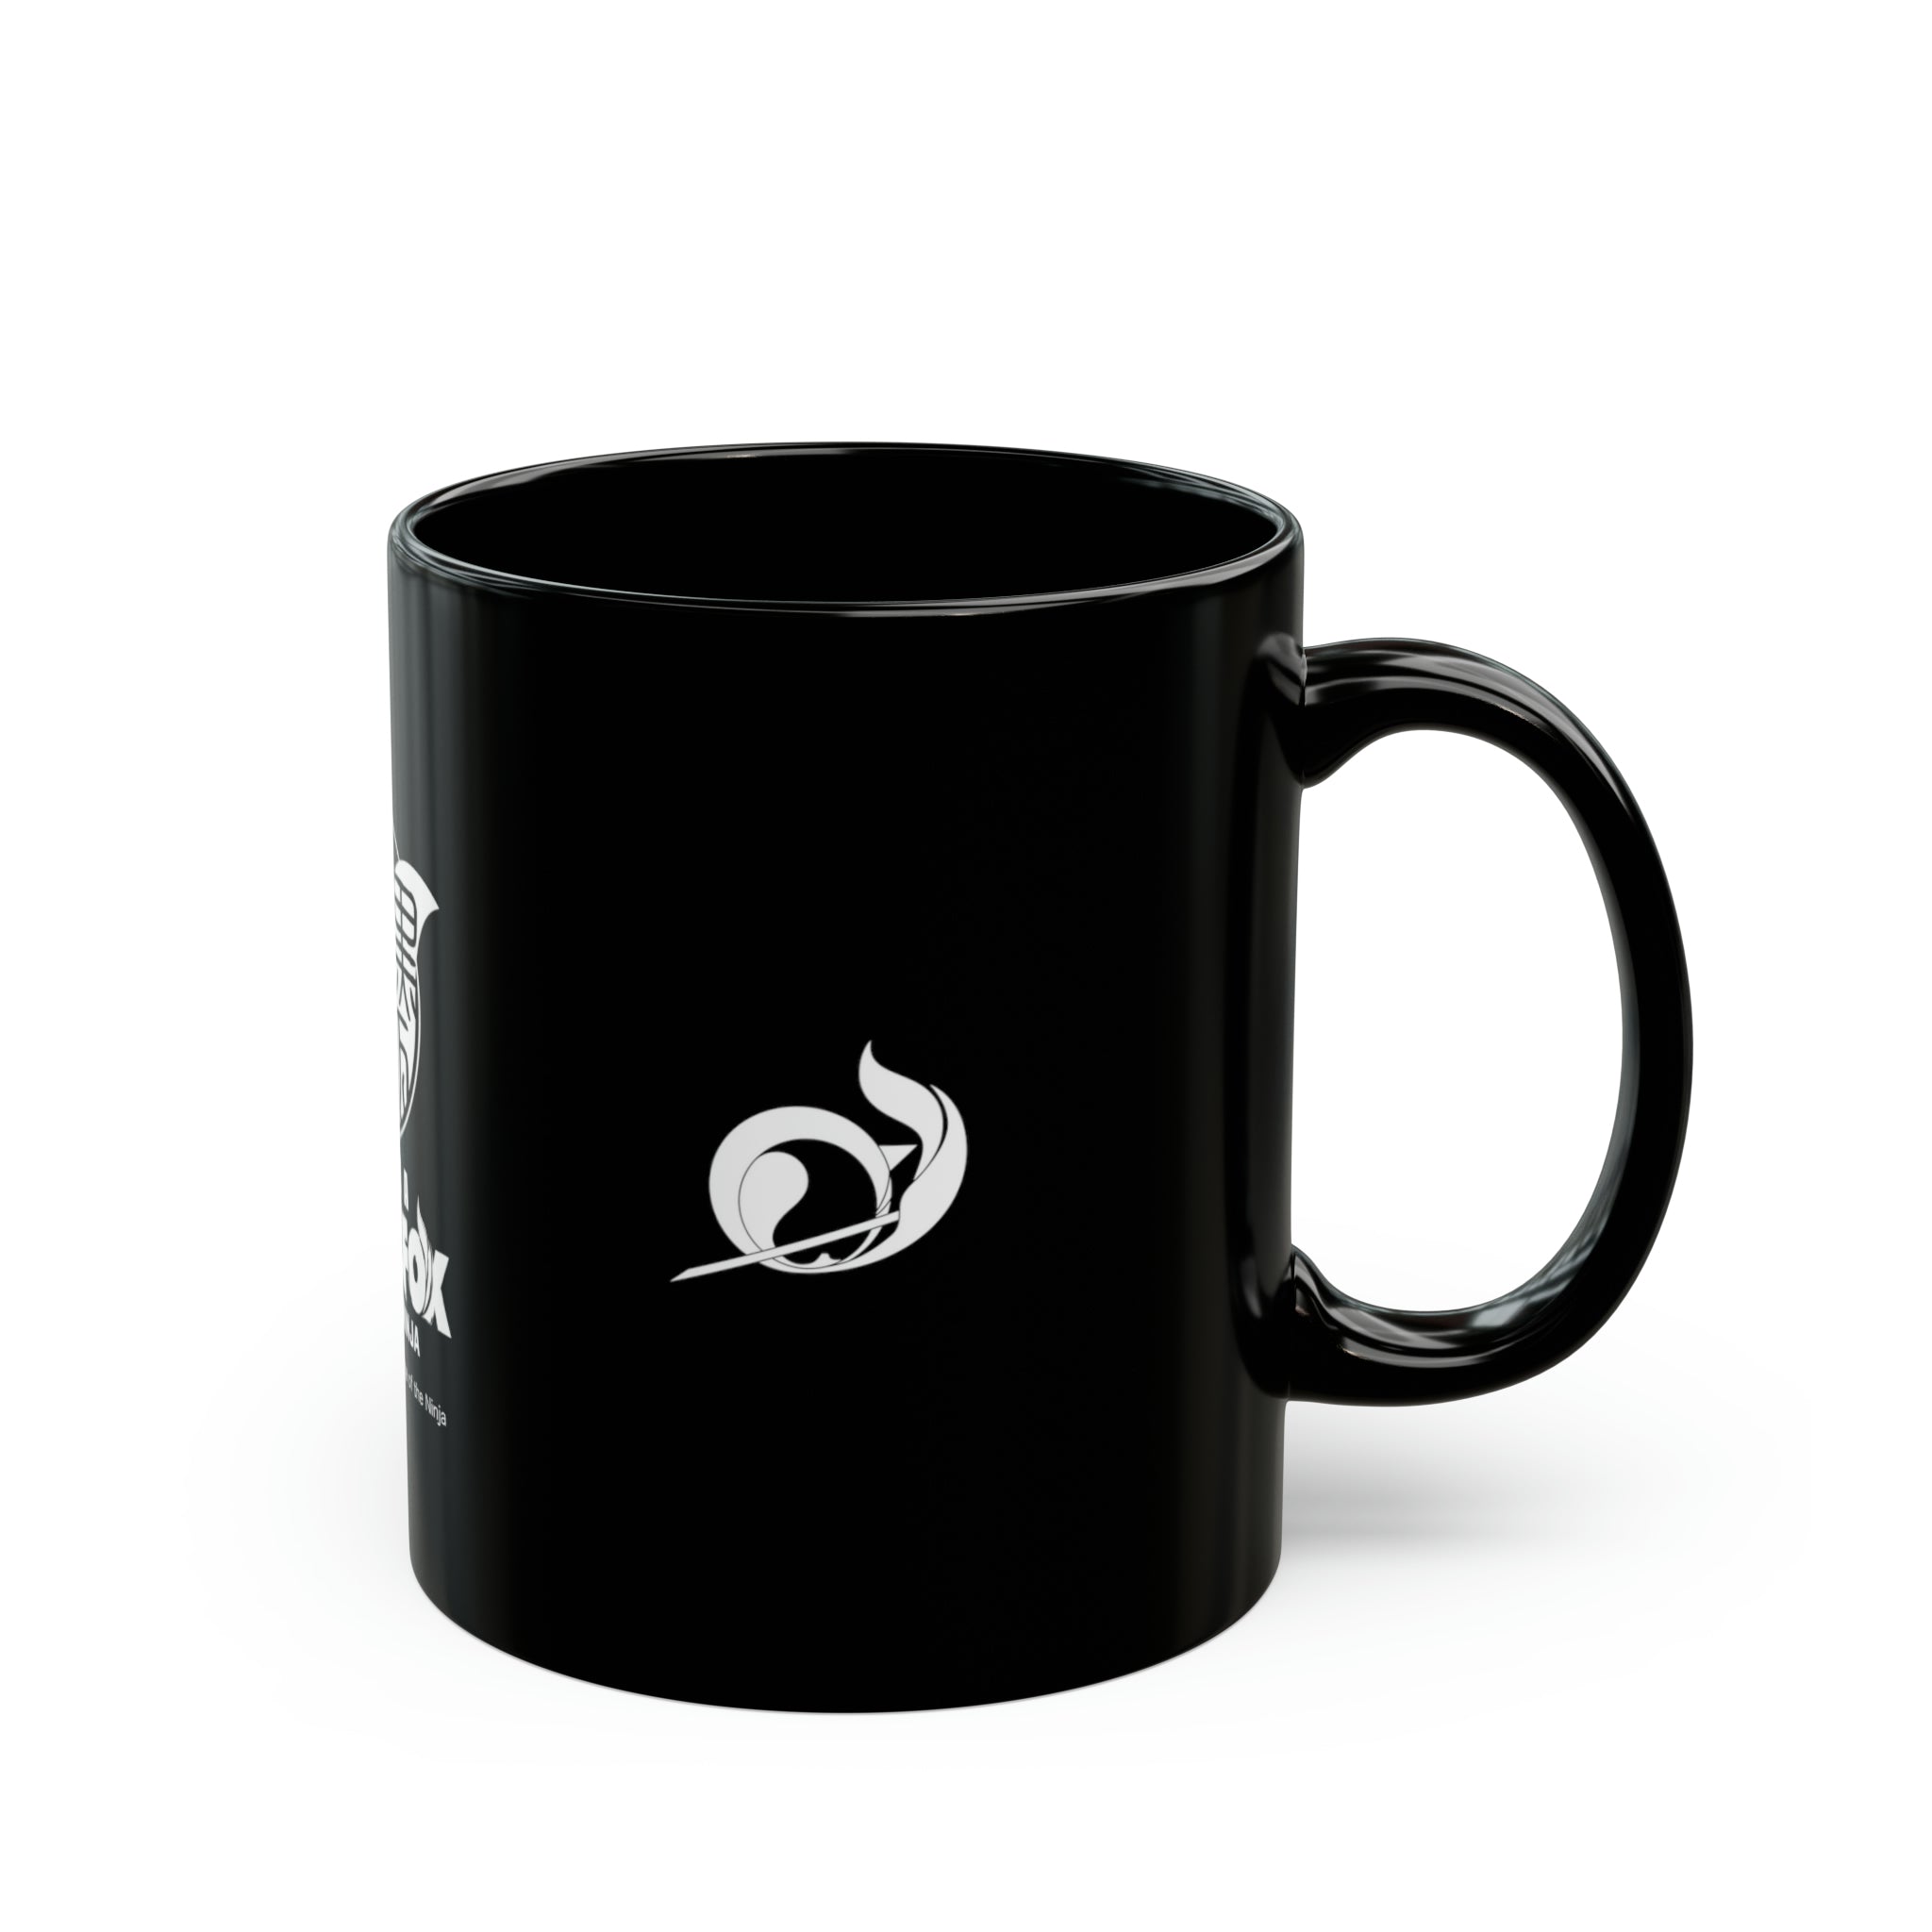 BLACKFOX INSIGNIA Coffee Mug (Black)